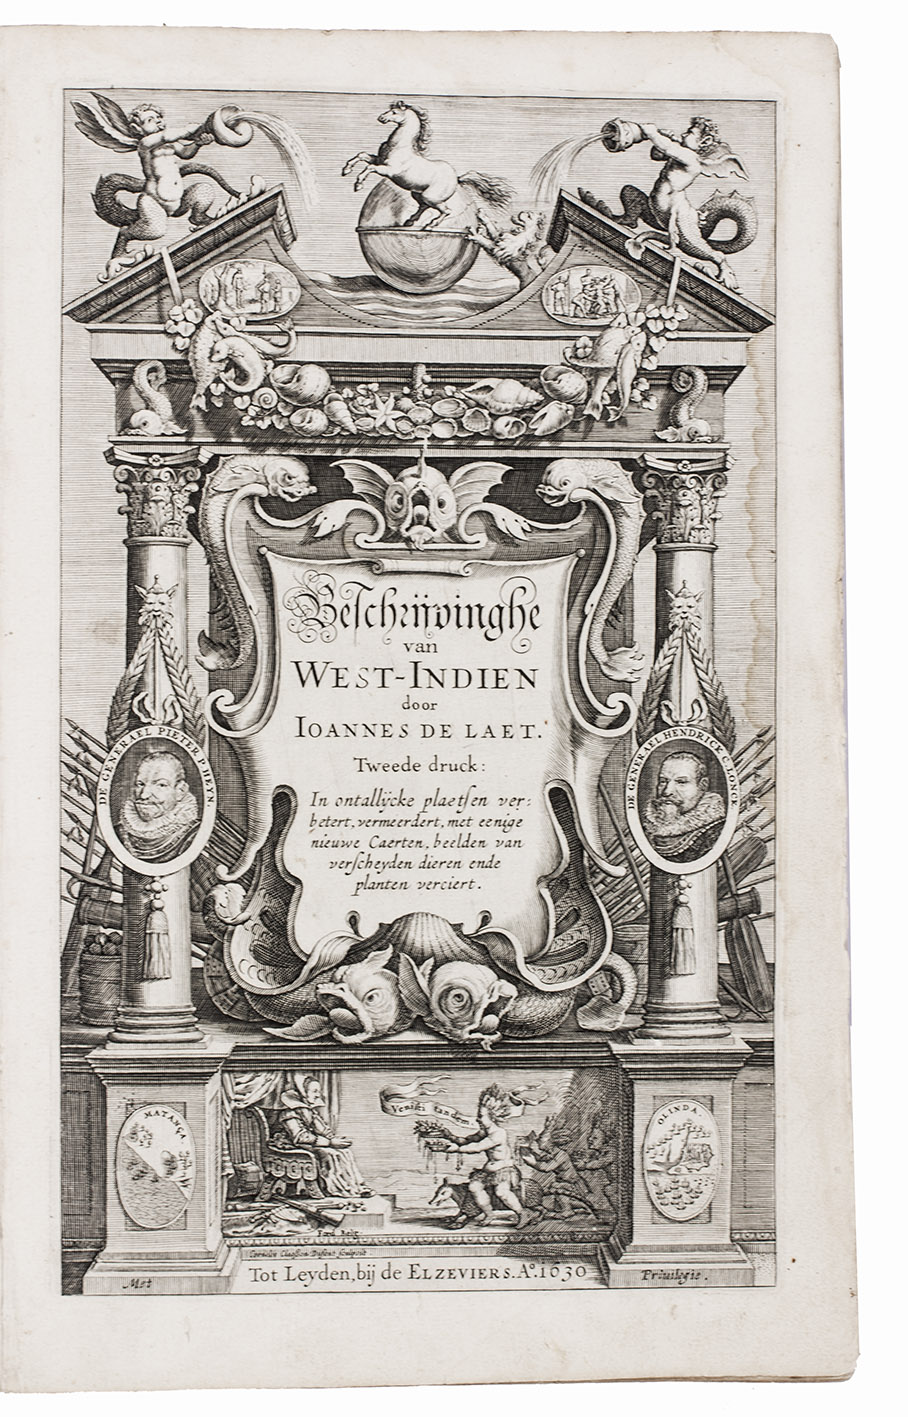 LAET, Johannes de. - Beschrijvinghe van West-Indien ... Tweede druck.Leiden, Elzevier, 1630. Folio. With engraved frontispiece, 14 folding engraved maps, and many text illustrations. Contemporary vellum.